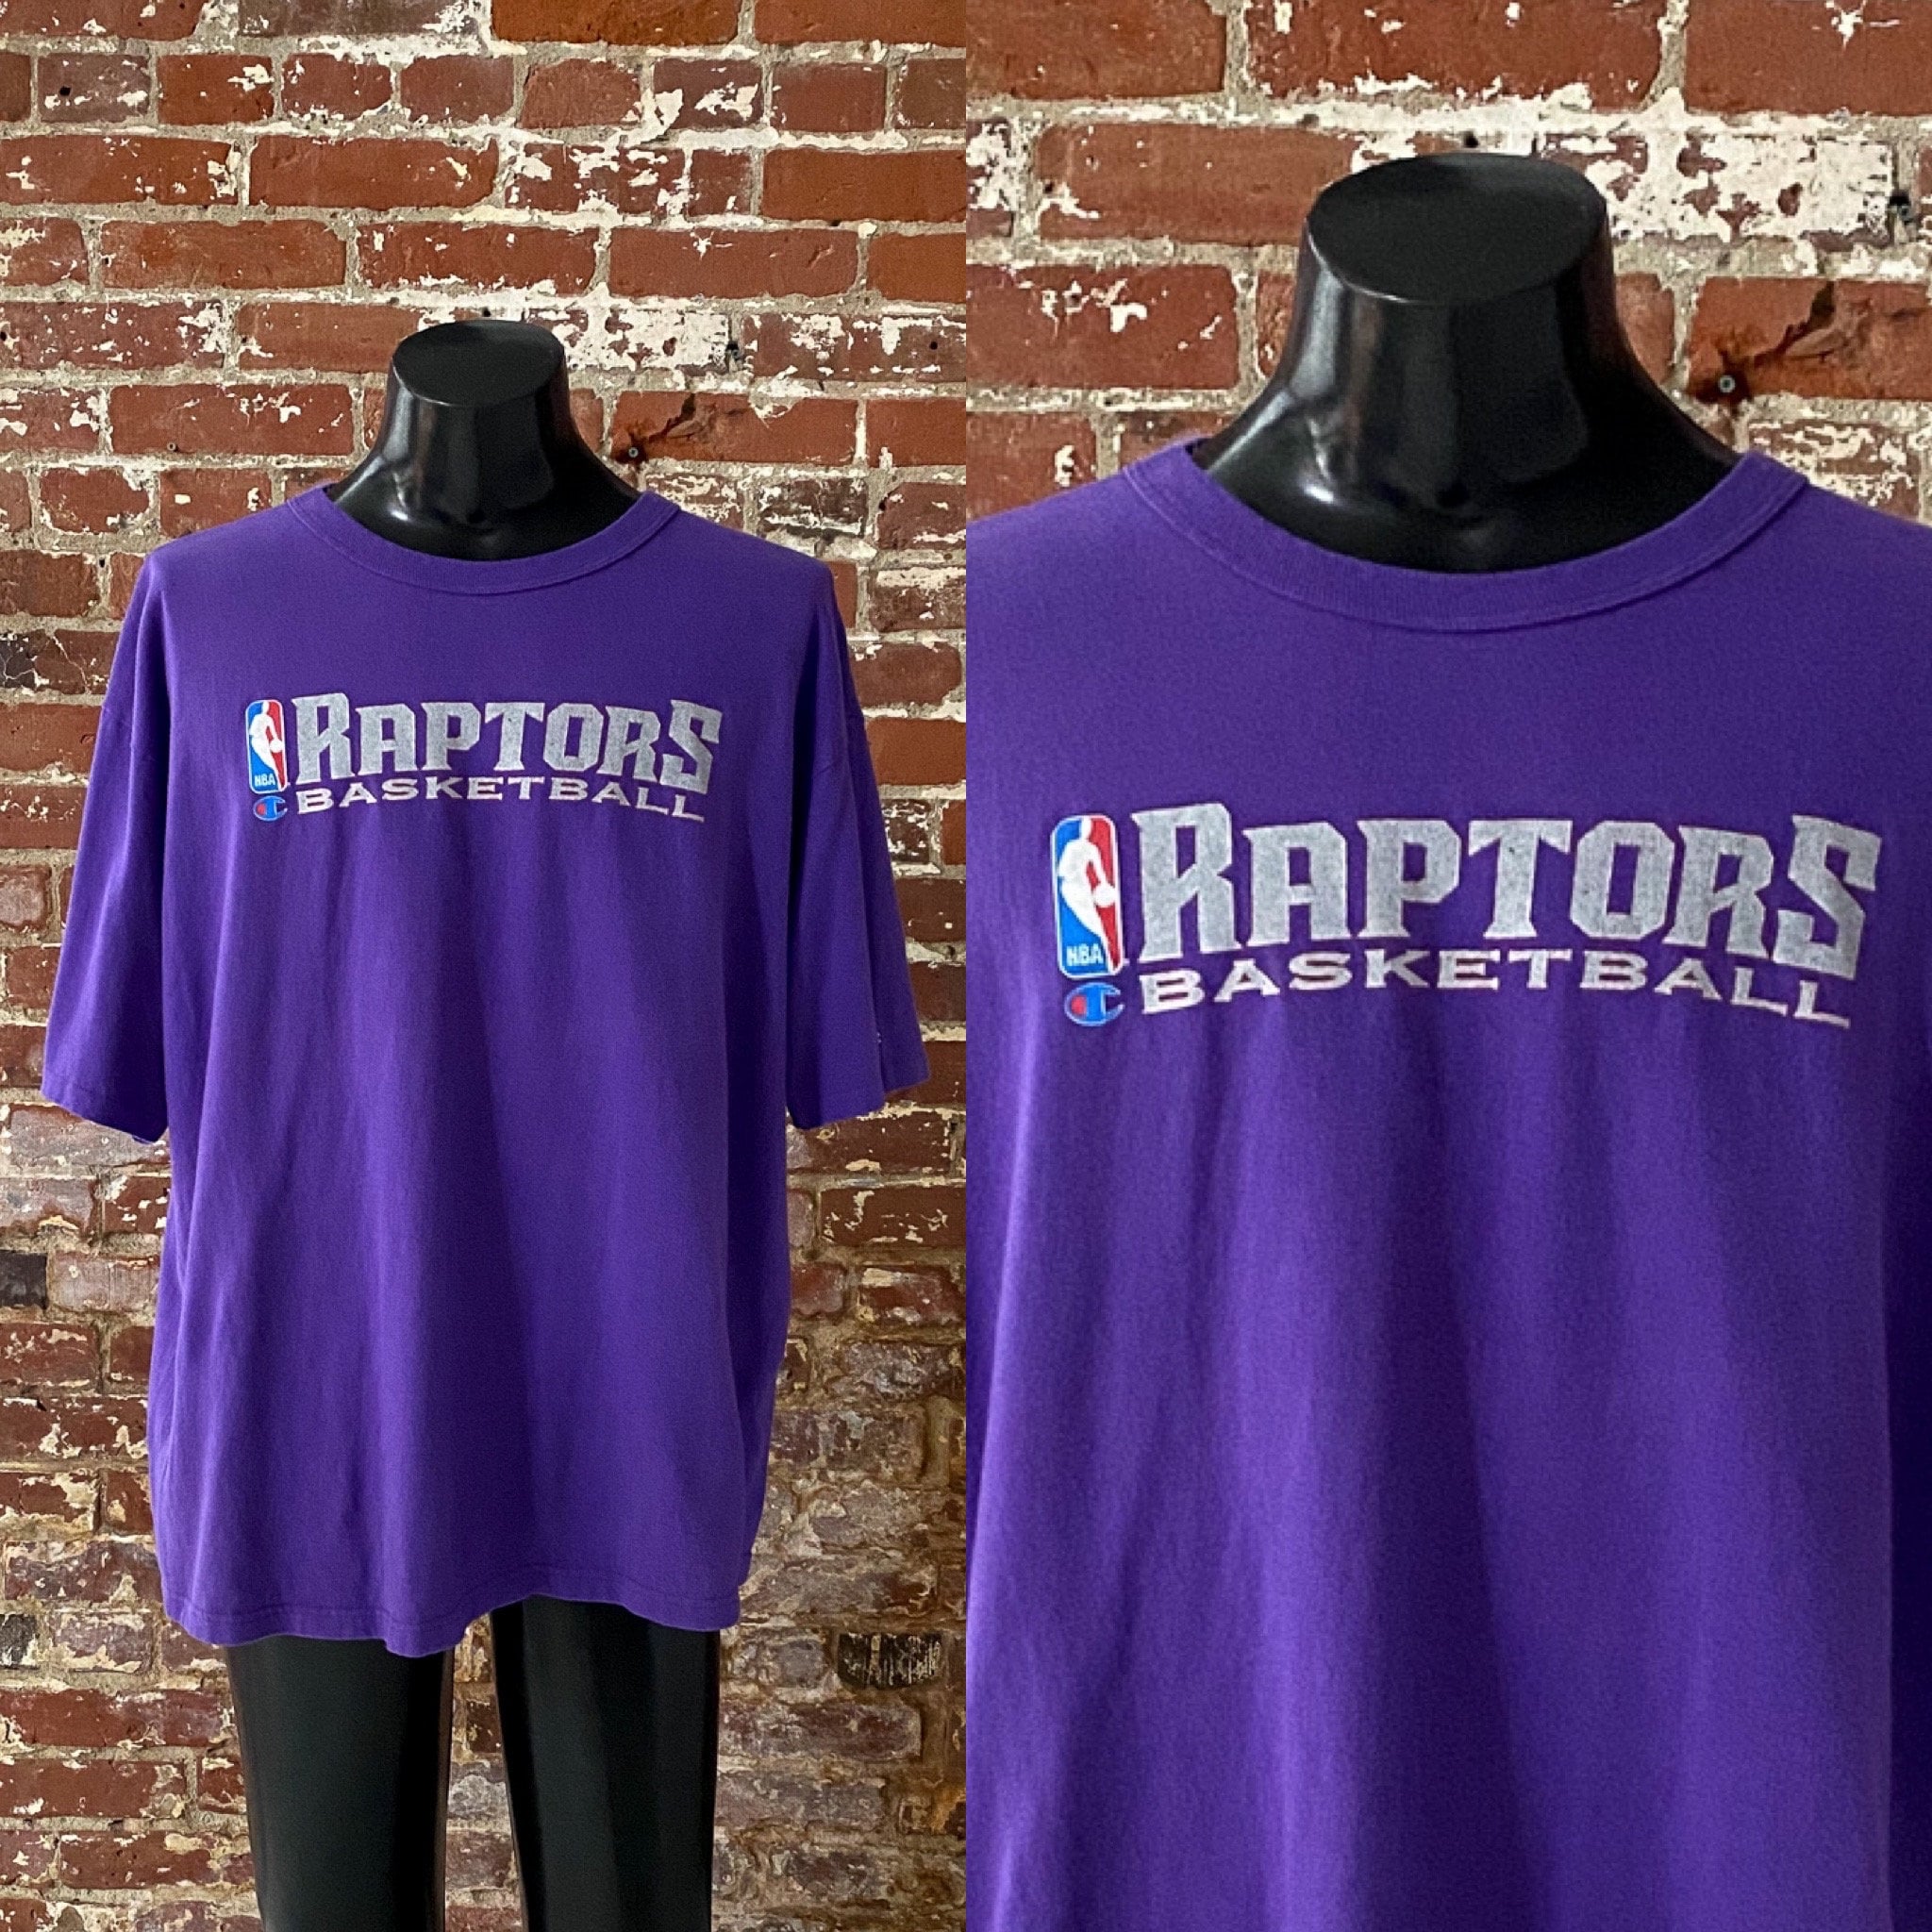 I HATE LA Boston Celtics Lakers Vintage Style Short-Sleeve Unisex T-Shirt